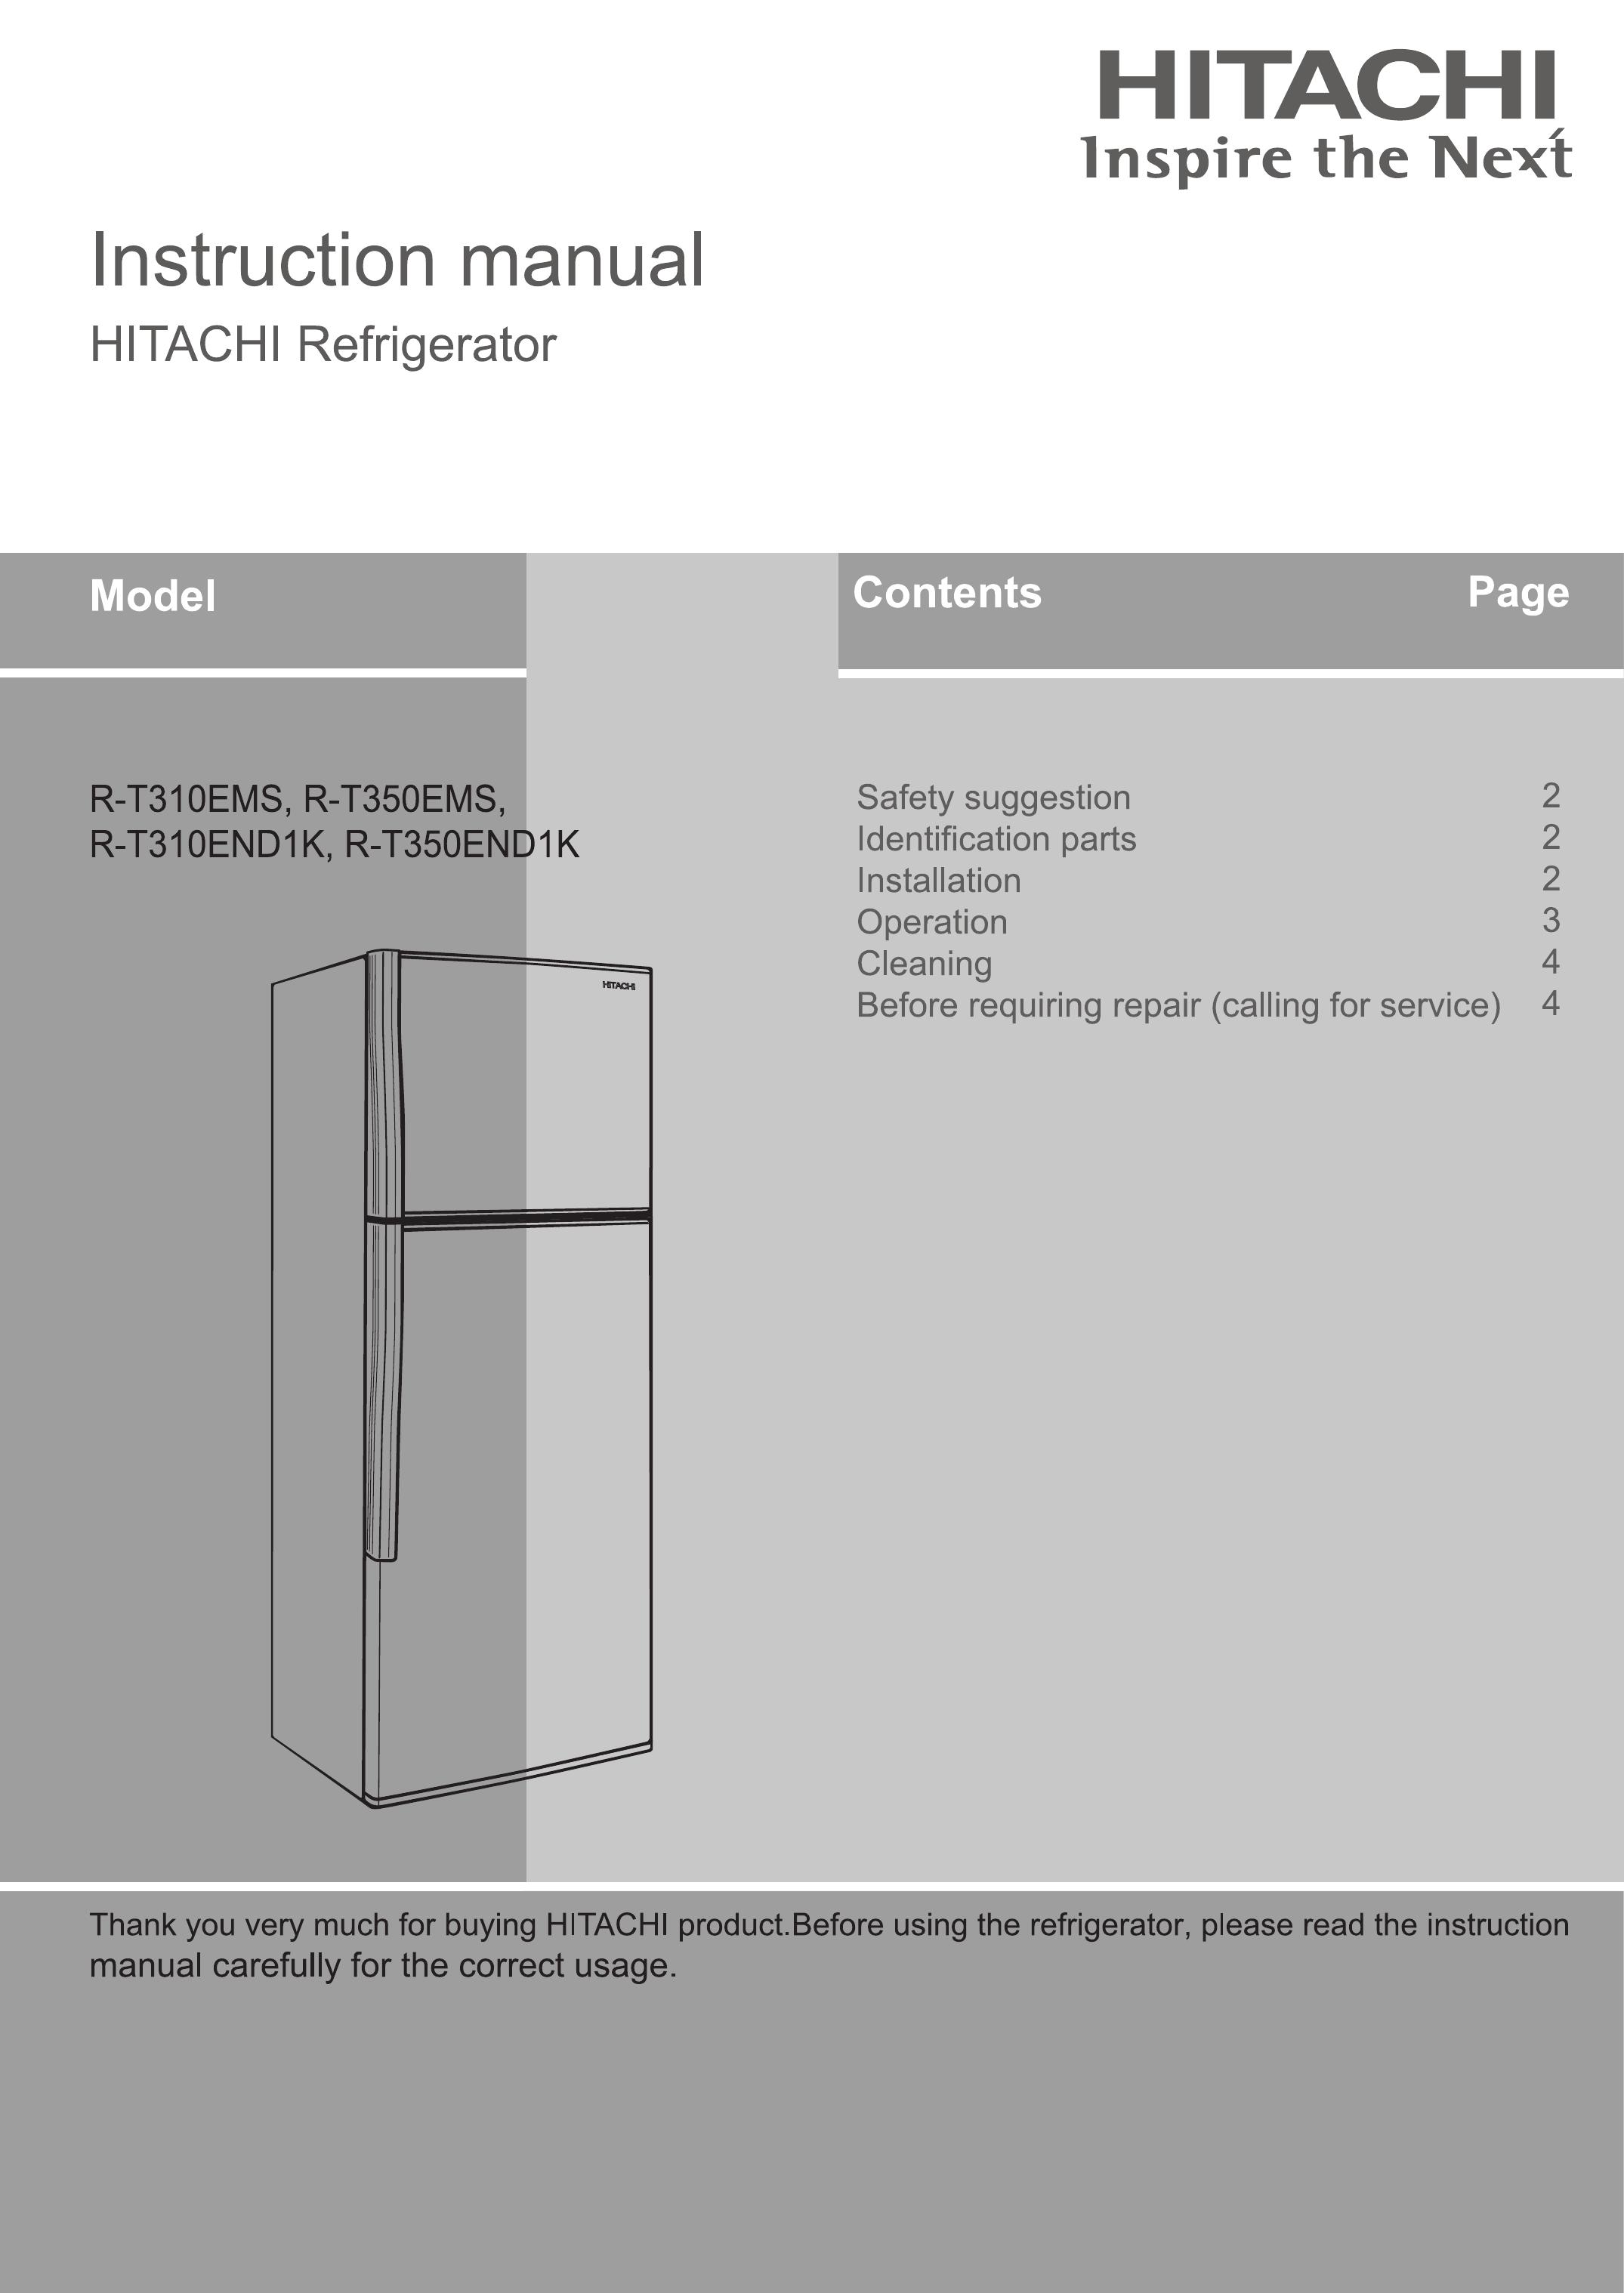 Hitachi R-T310ENK1K Refrigerator User Manual